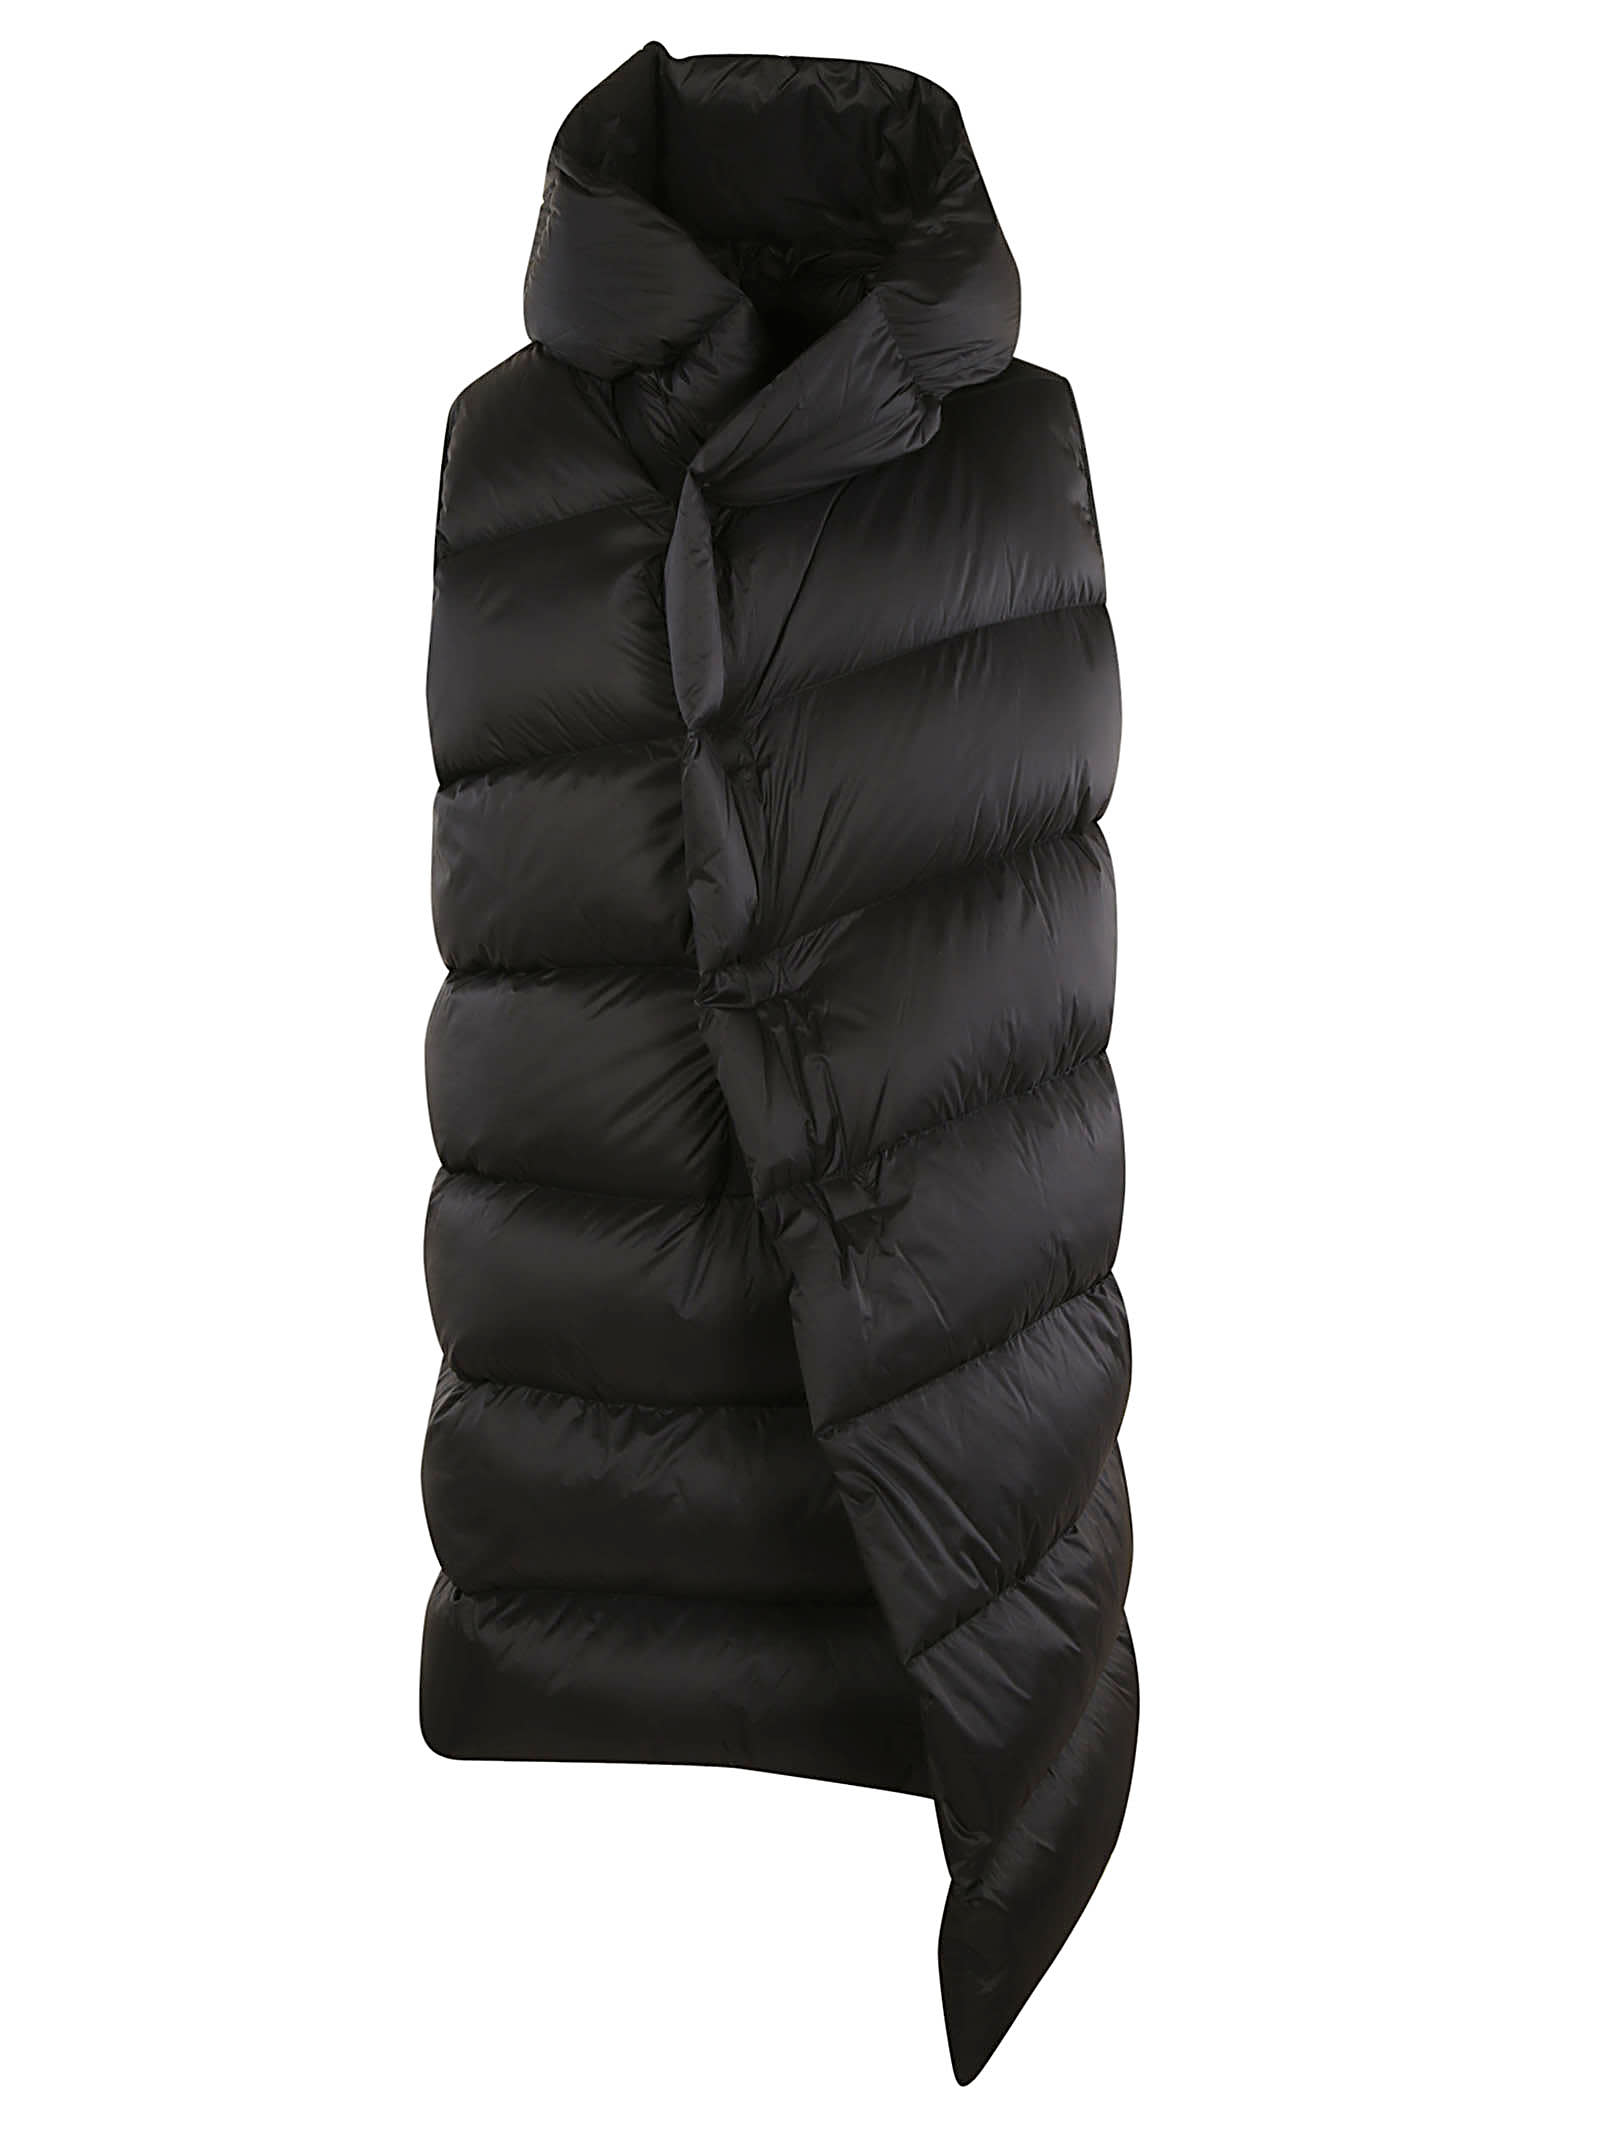 Mountain Duvet puffer jacket by Rick Owens | Coshio Online Shop